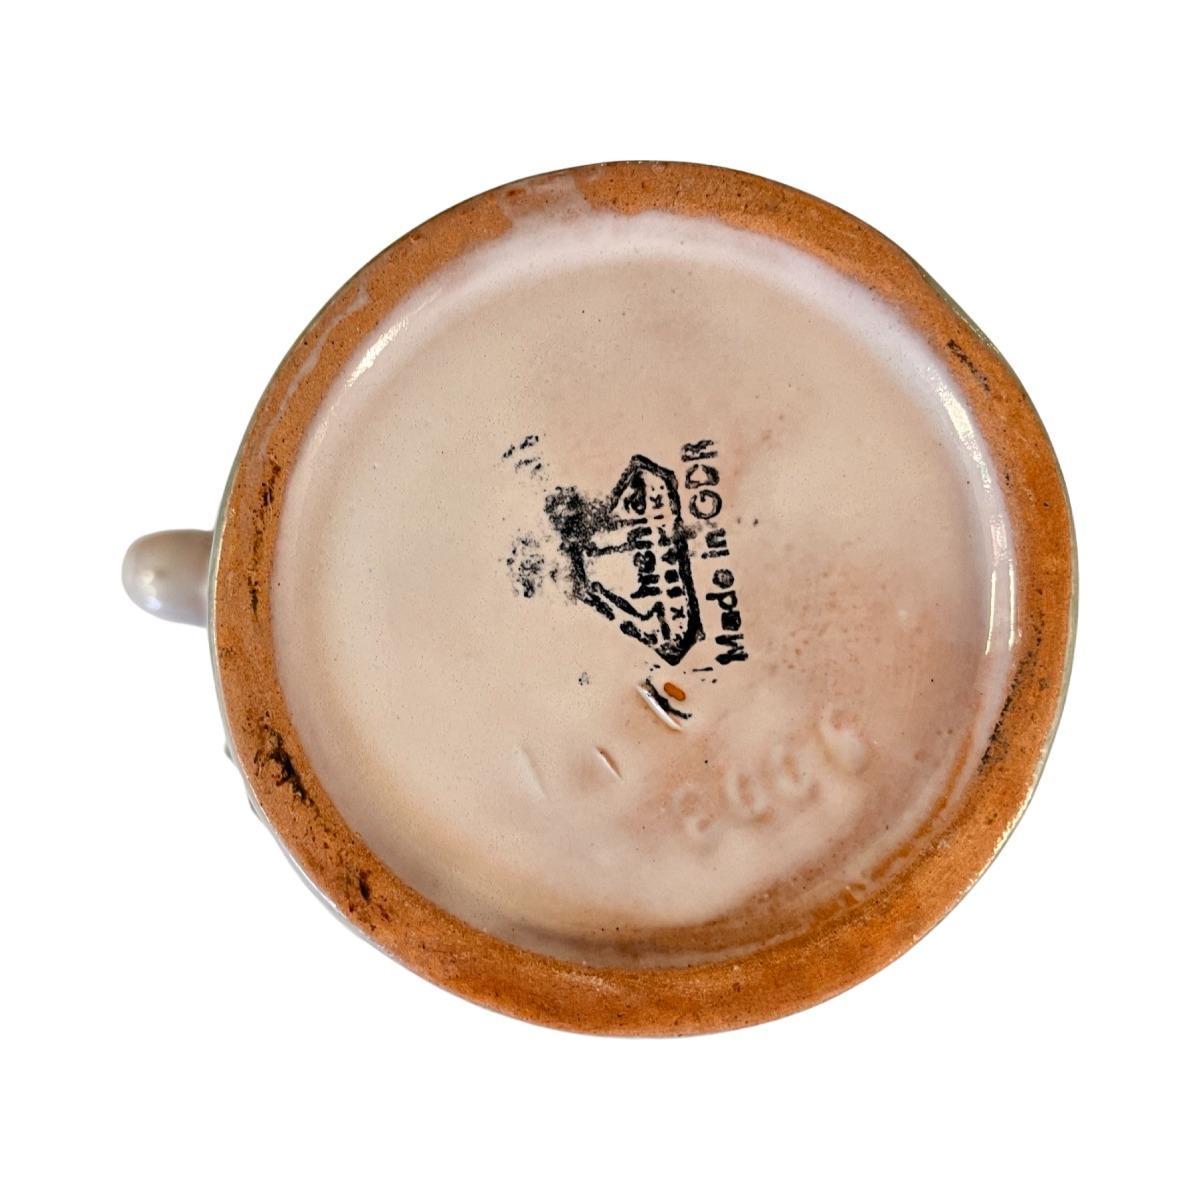 Ceramiczny dzbanek z uchem, Strehla Keramik, Niemcy, lata 70. nr. 8